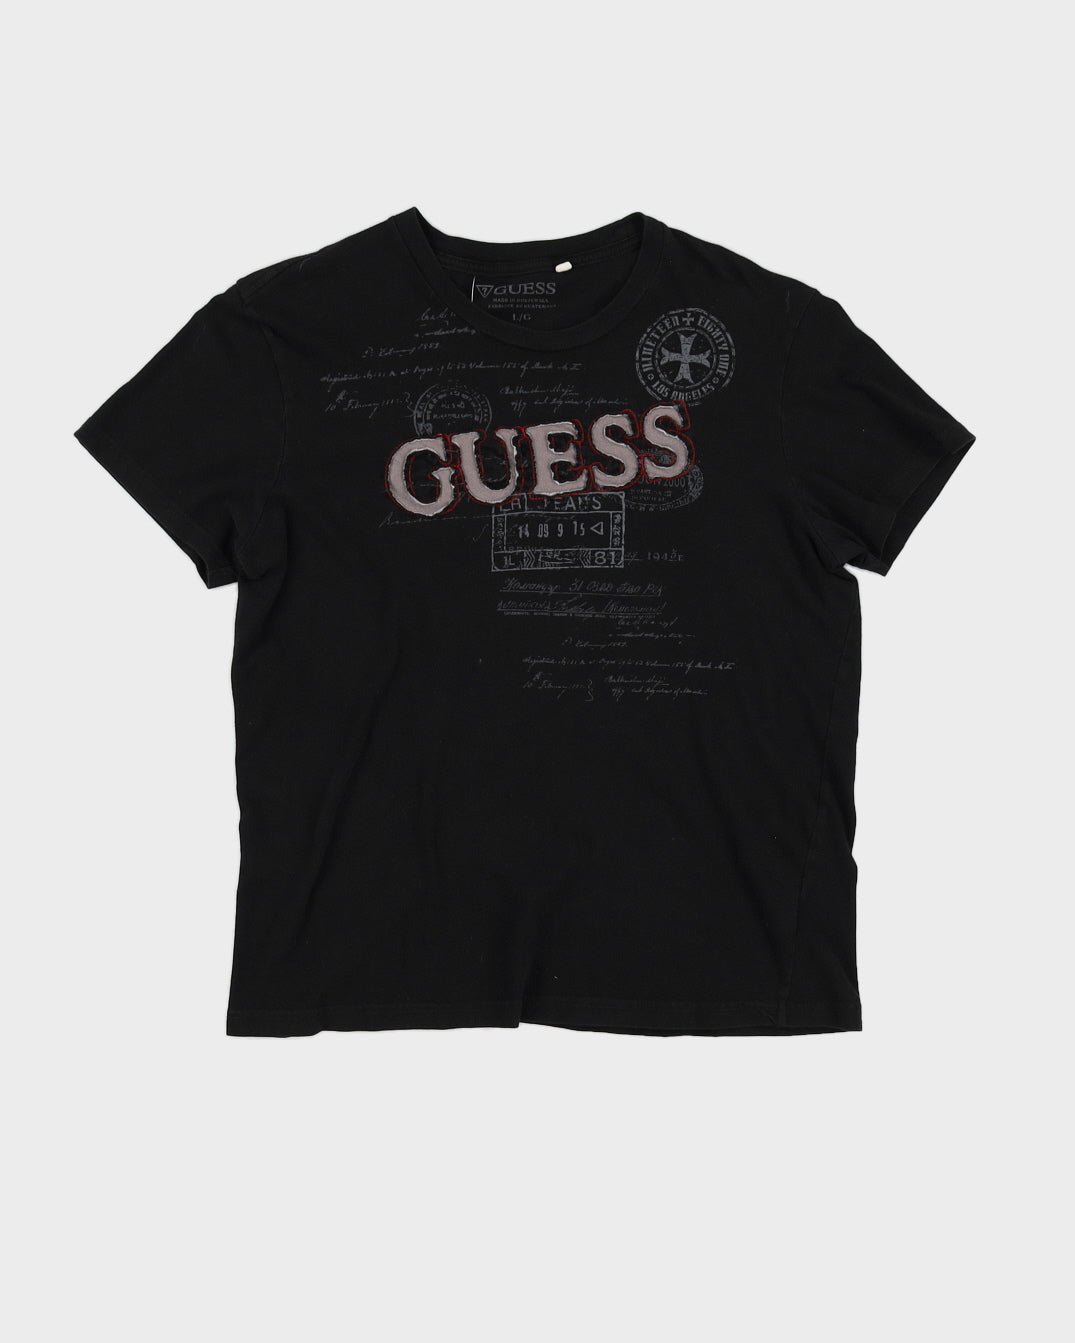 00s Guess Black Printed T-Shirt - M